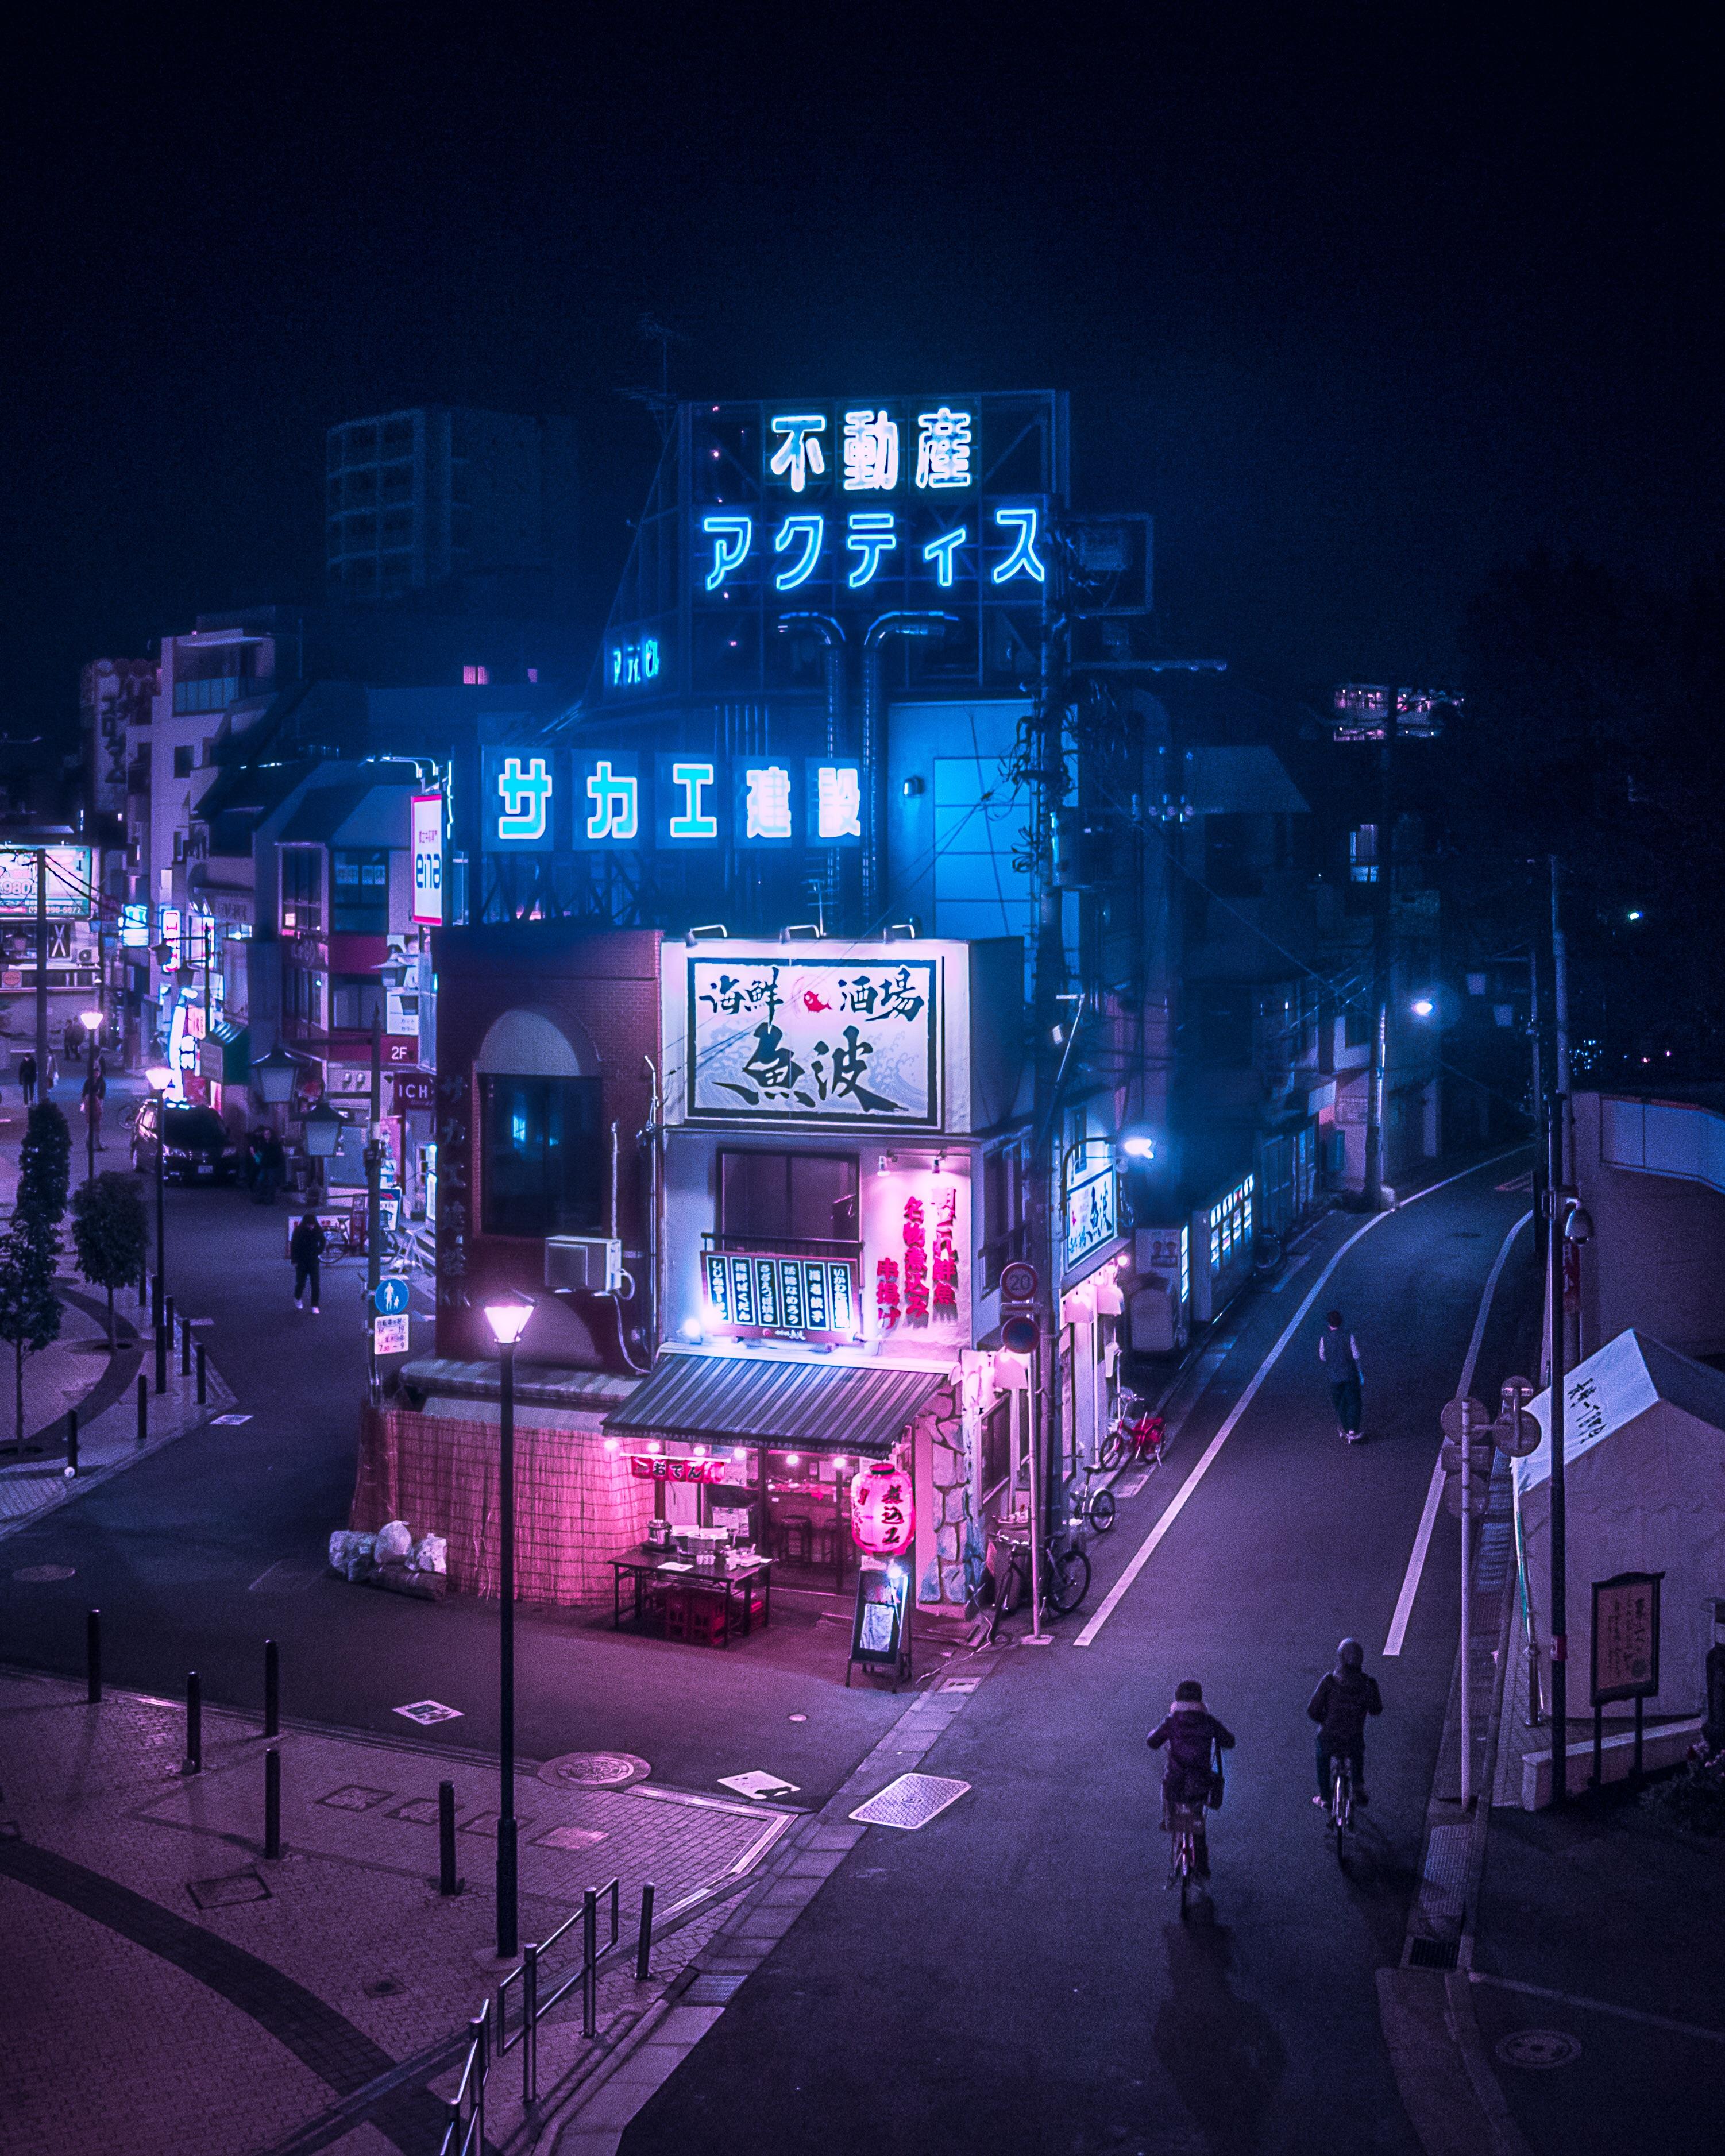 A photo I took walking around at night in Tokyo